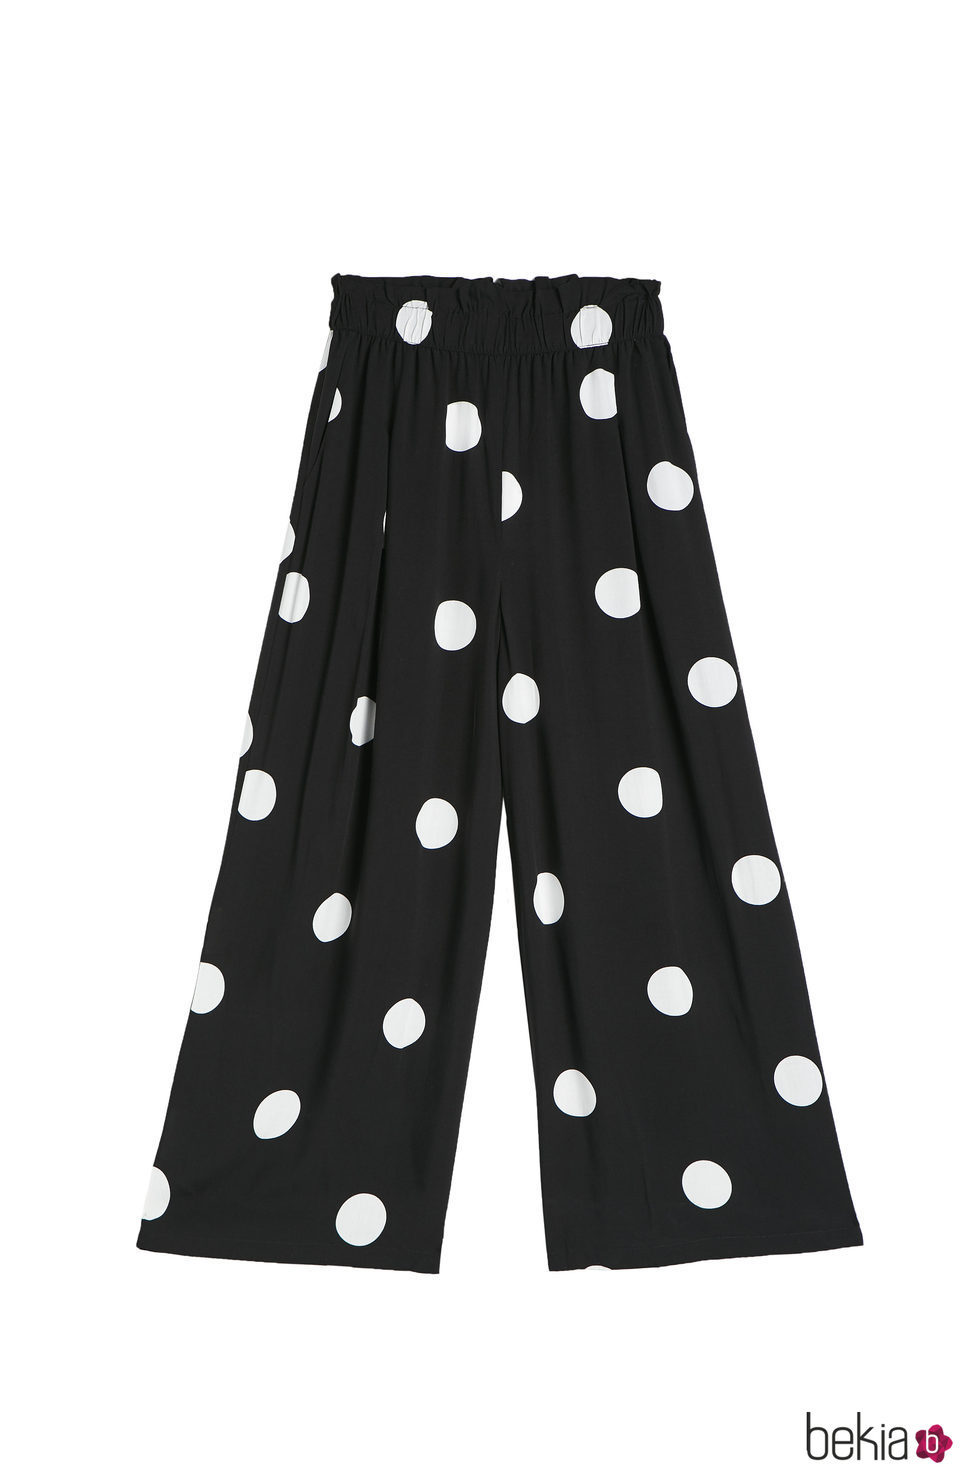 Pantalón negro con lunares blancos de la colección Beachwear SS18 de Oysho